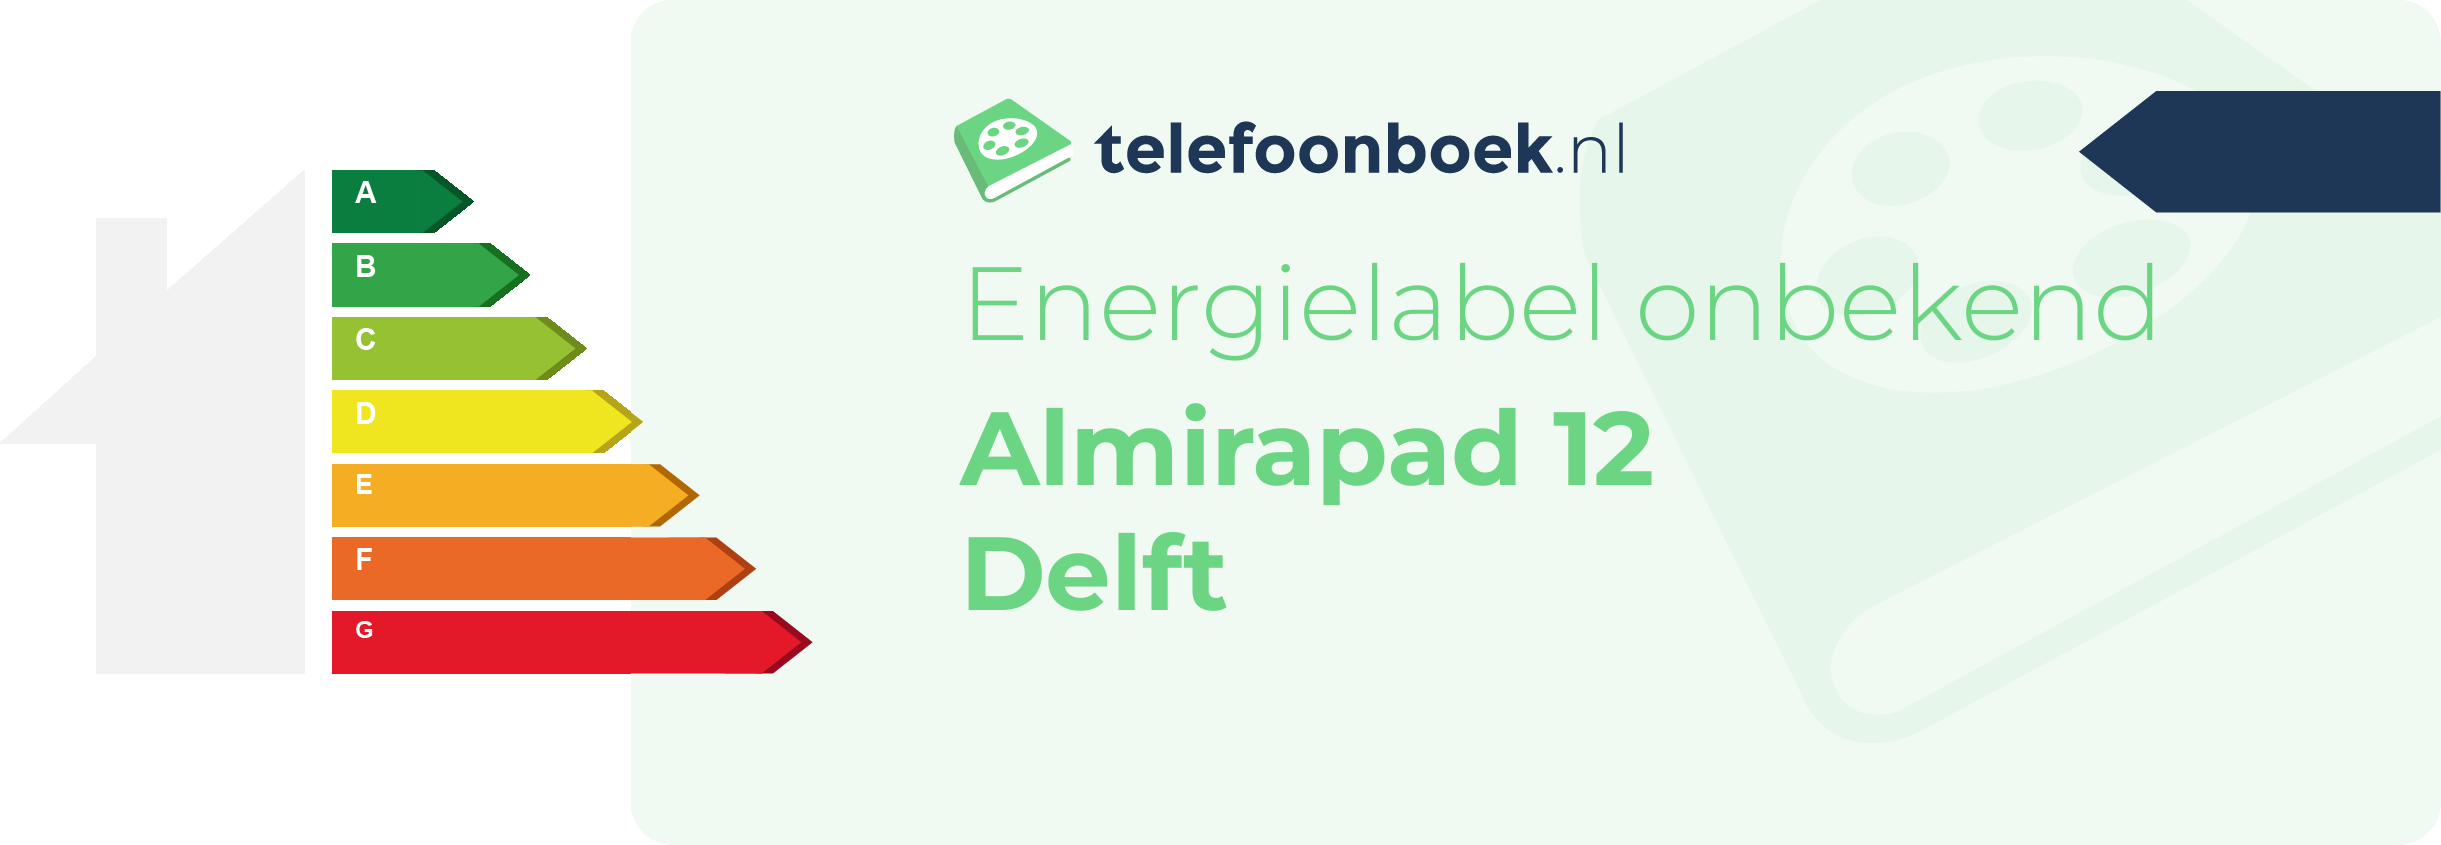 Energielabel Almirapad 12 Delft